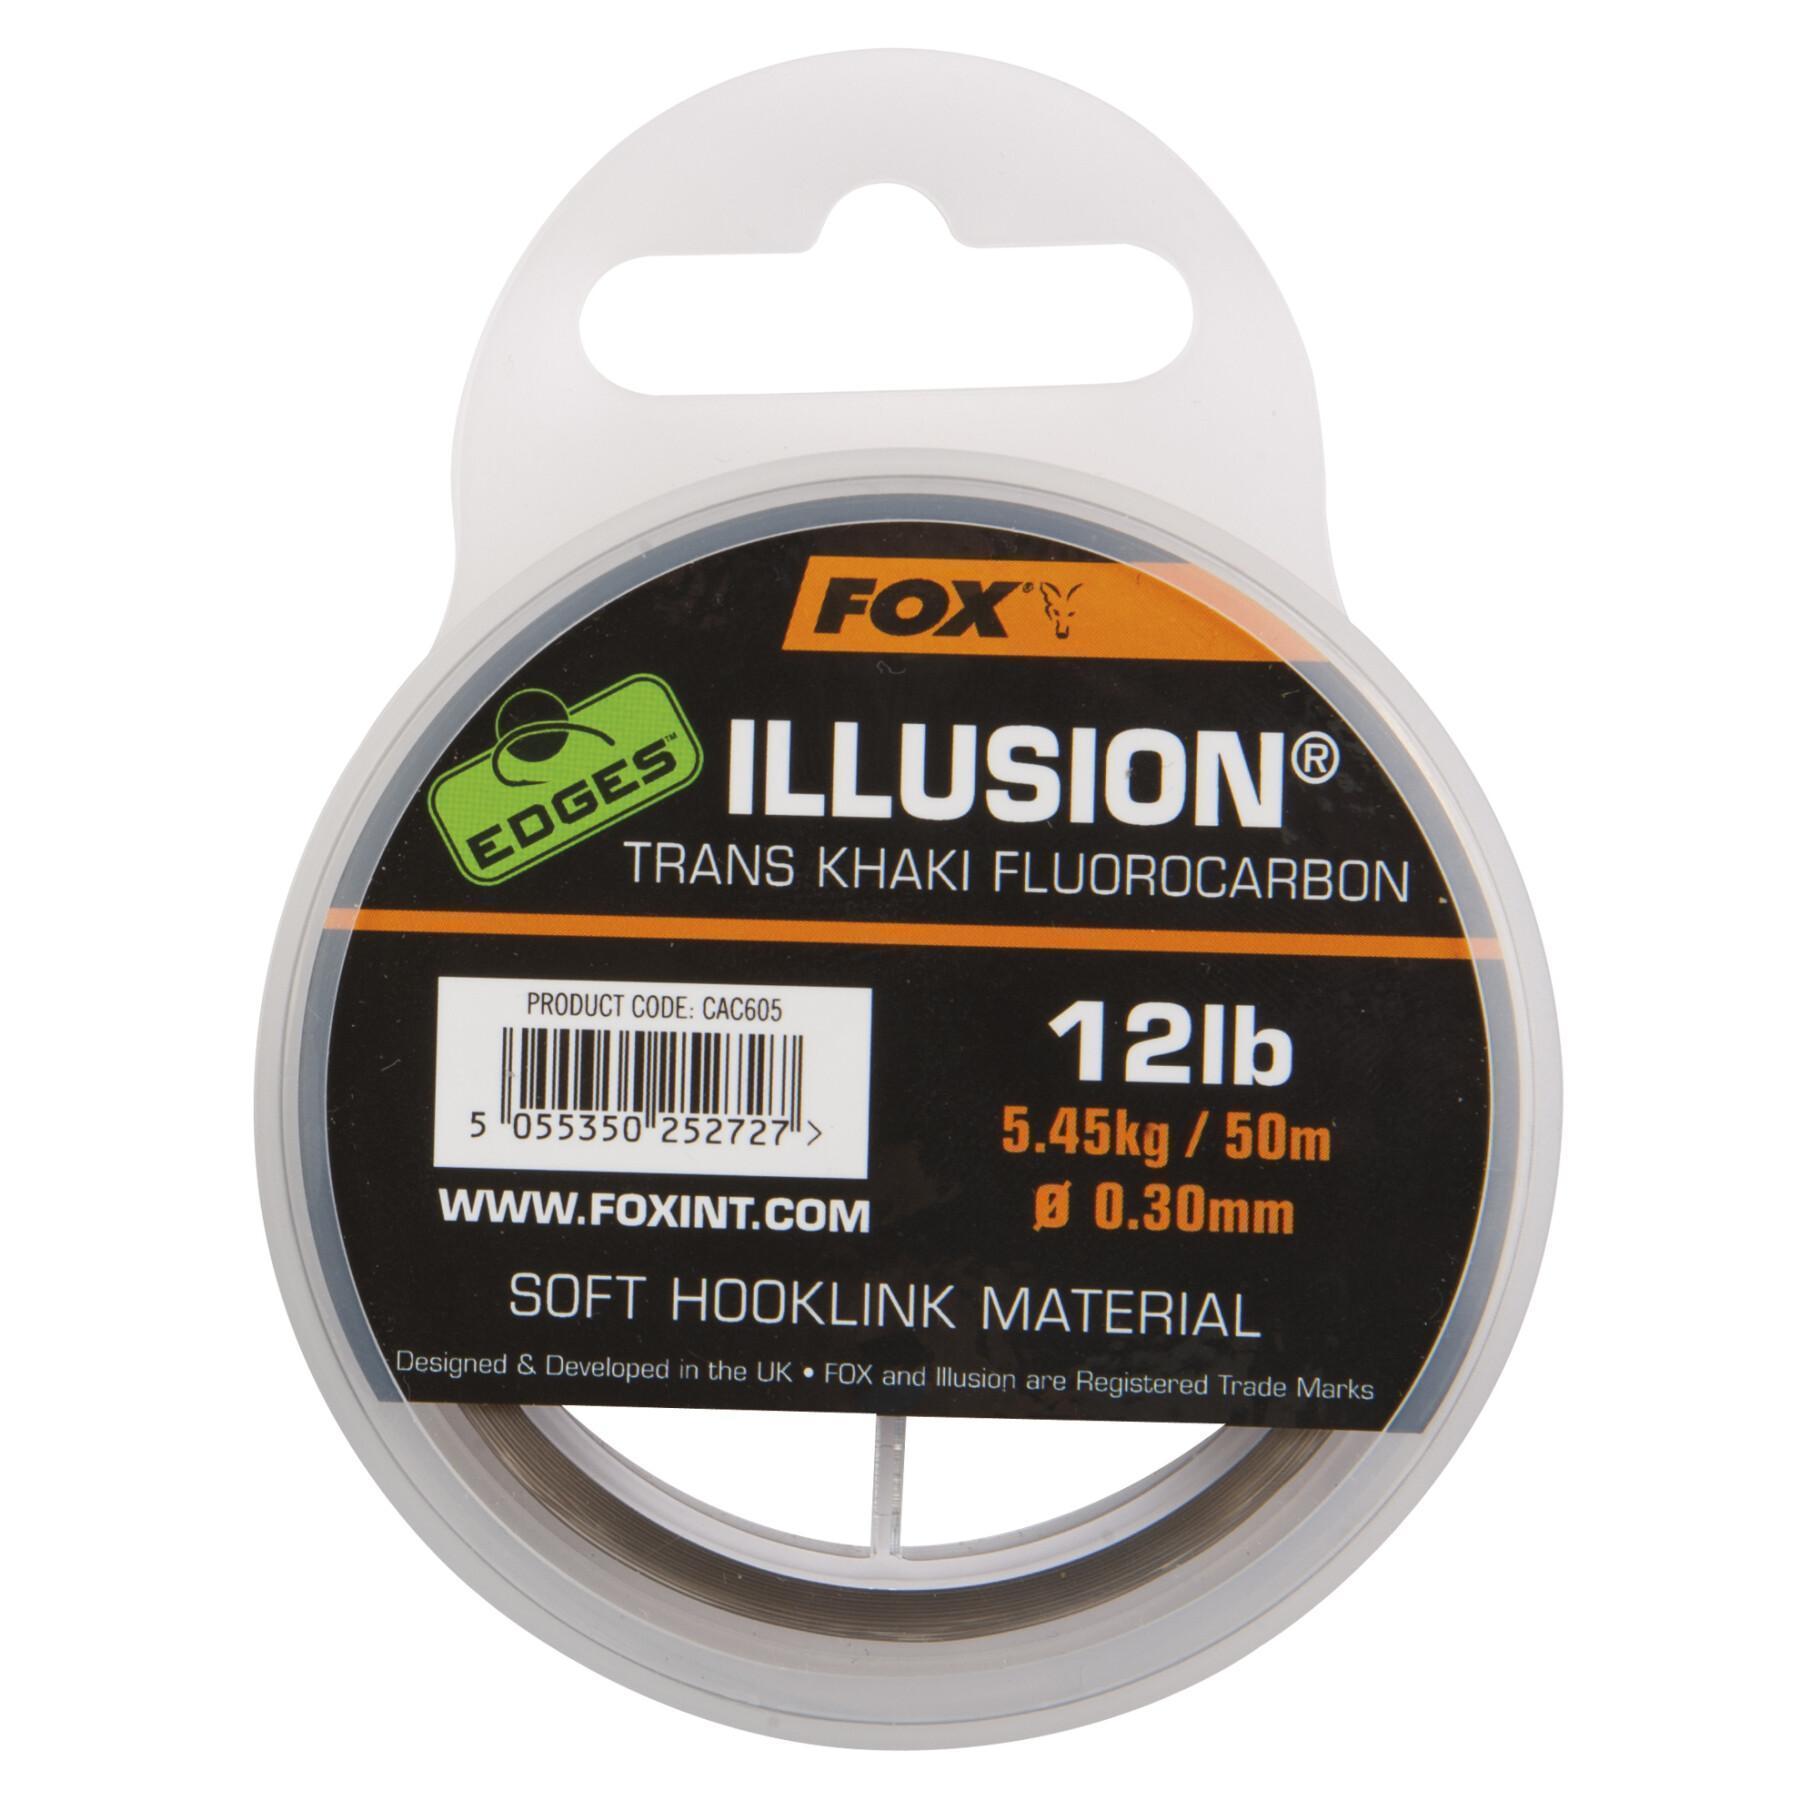 Illusion mjuk fluorocarbonkabel Fox 12lb/0.30mm Edges